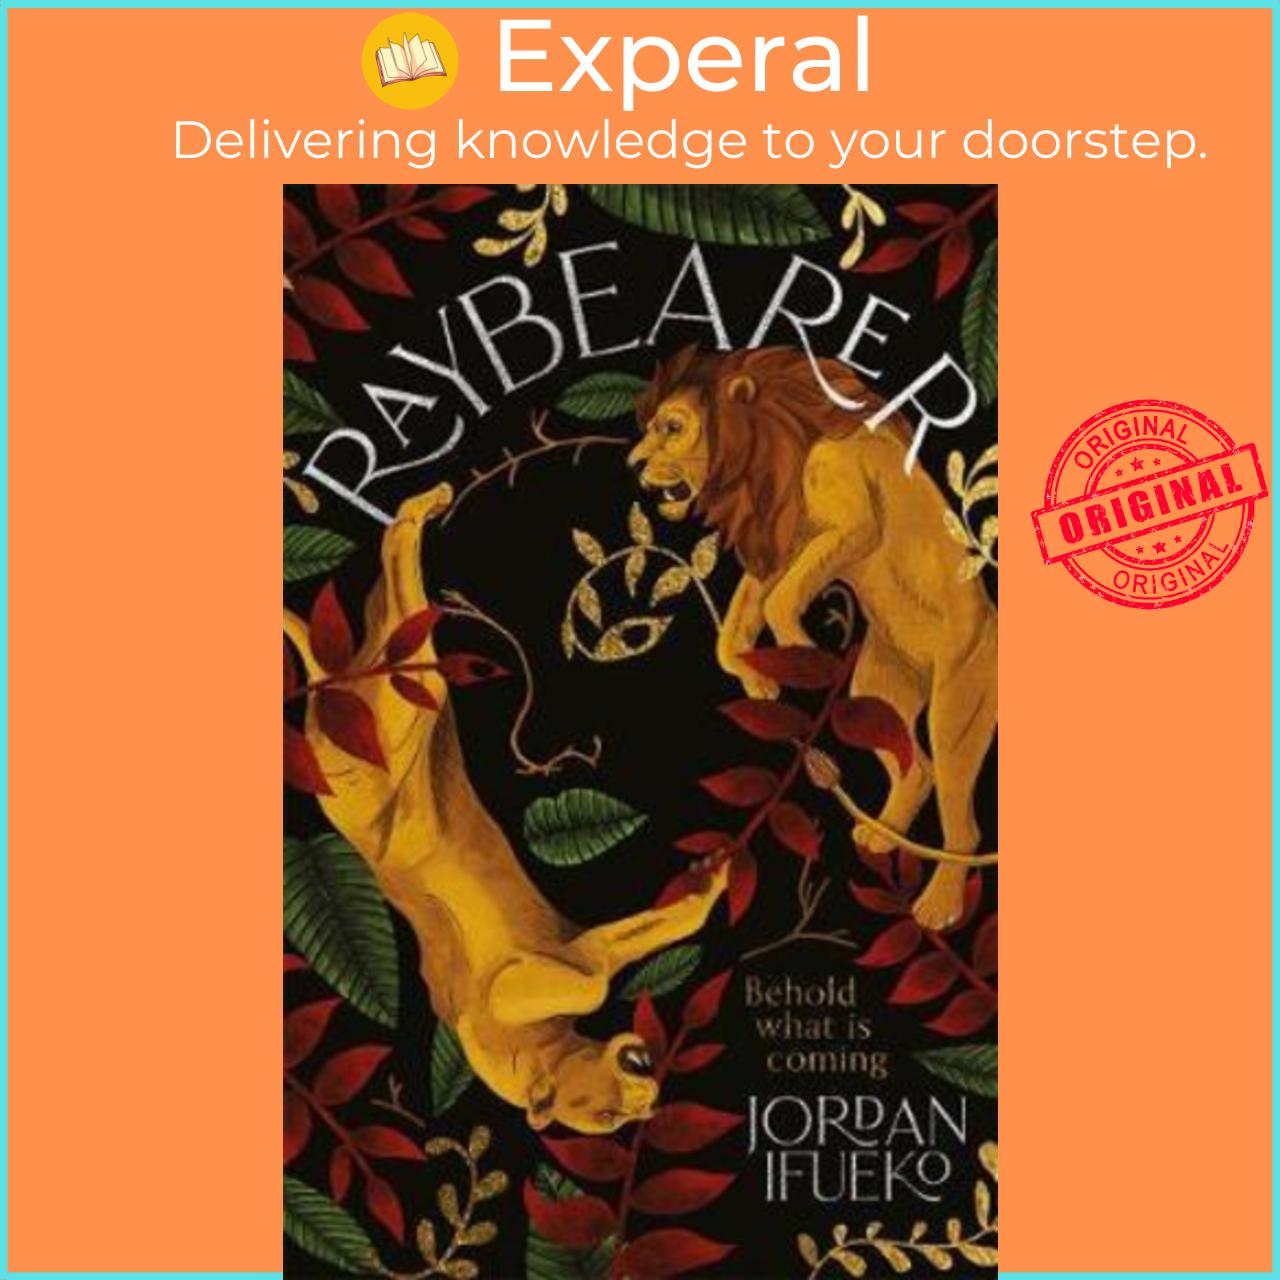 Sách - Raybearer : The epic and phenomenal New York Times bestselling YA fantas by Jordan Ifueko (UK edition, paperback)